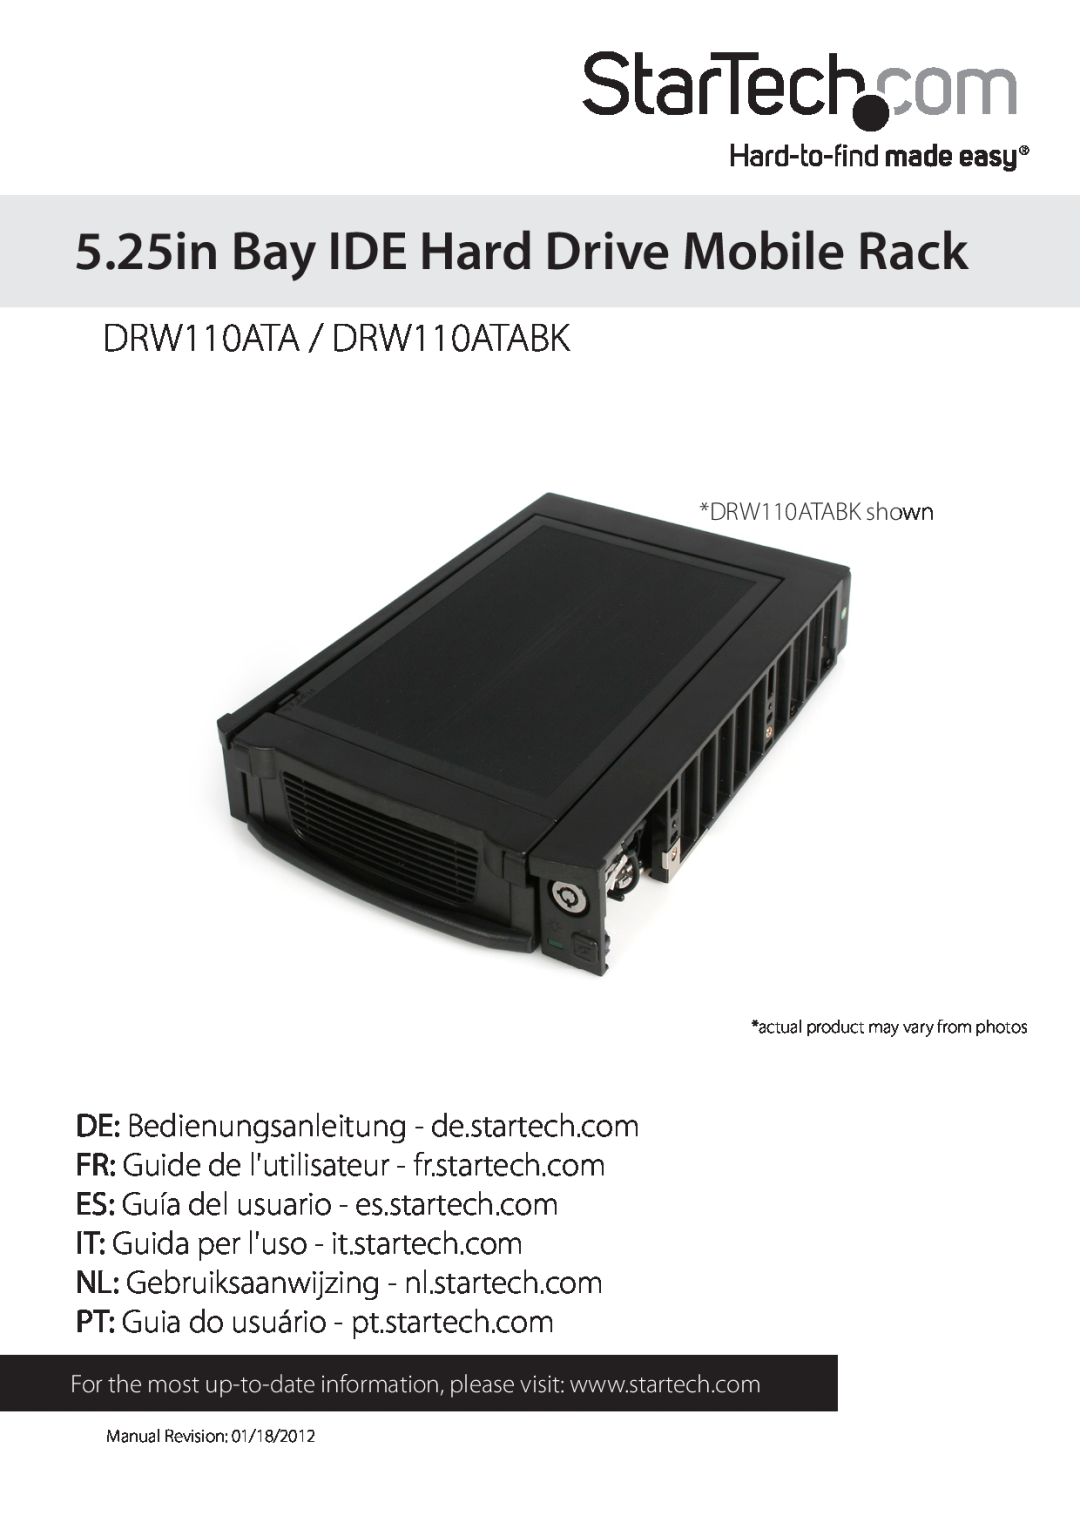 StarTech.com startech manual 5.25in Bay IDE Hard Drive Mobile Rack, DRW110ATA / DRW110ATABK, Manual Revision 01/18/2012 